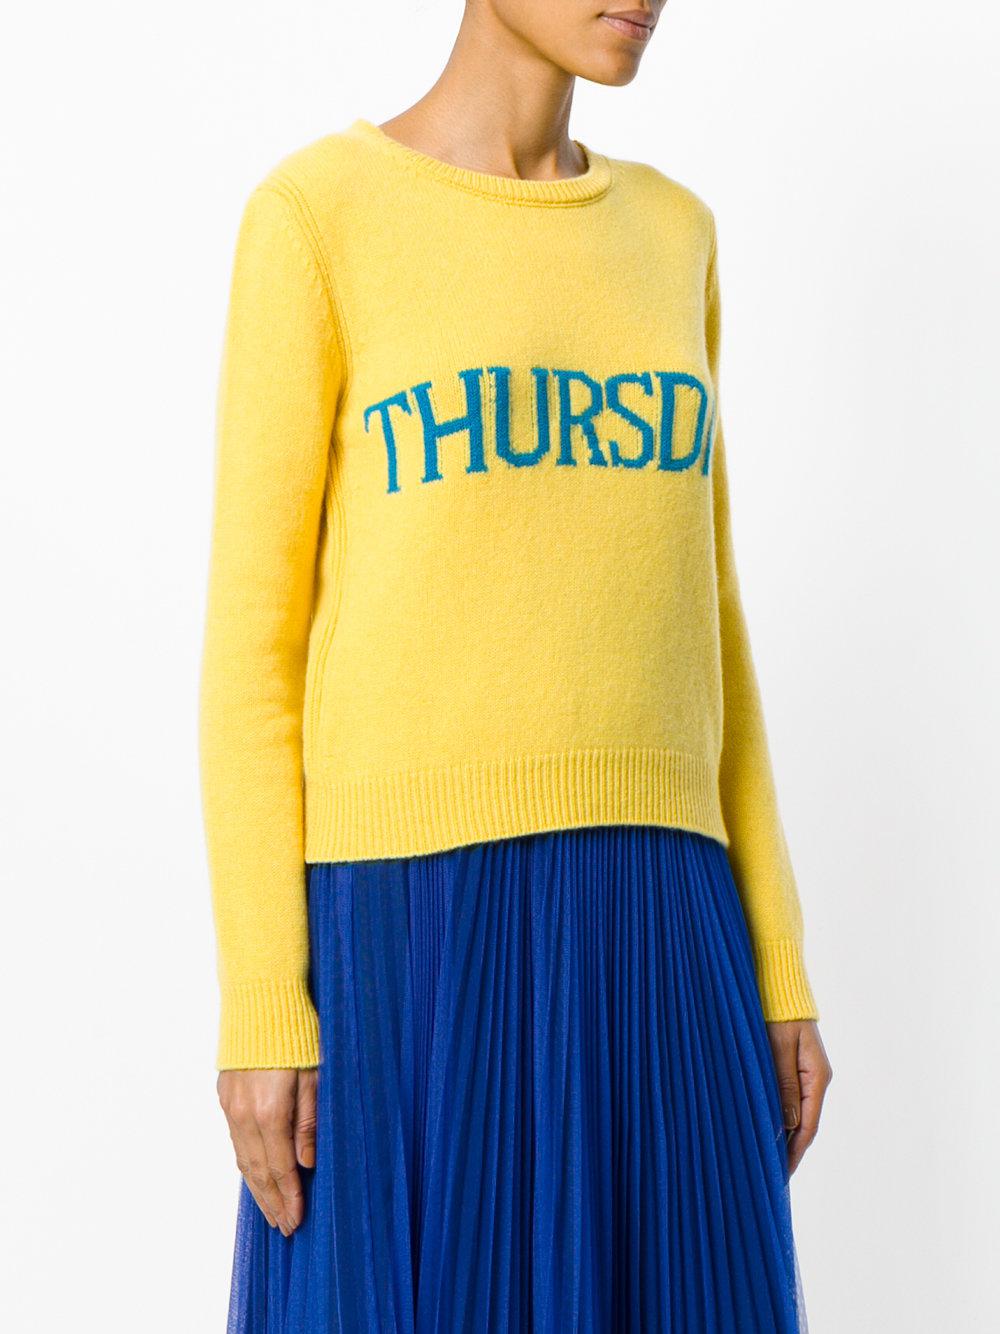 Alberta Ferretti Thursday Crewneck Sweater in Yellow | Lyst